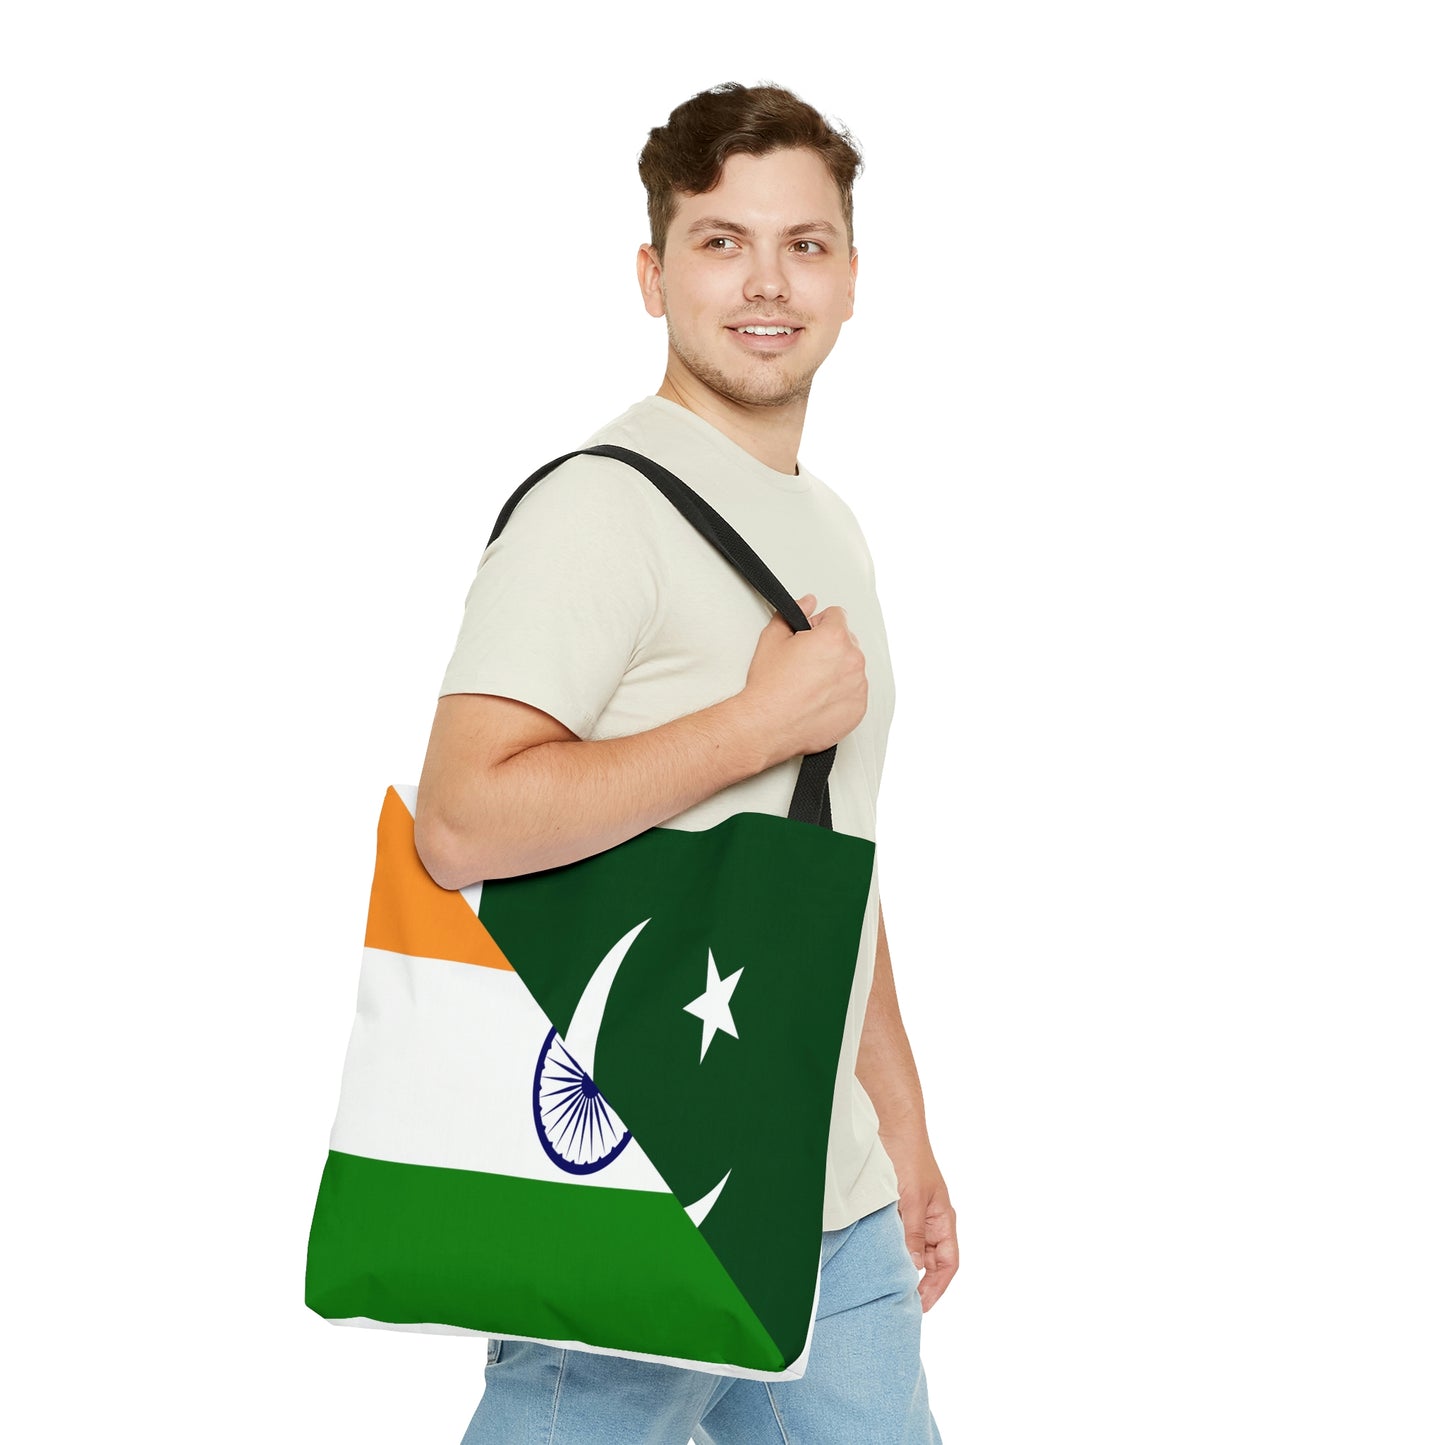 Pakistani Indian Flag Pakistan India Tote Bag | Shoulder Bag